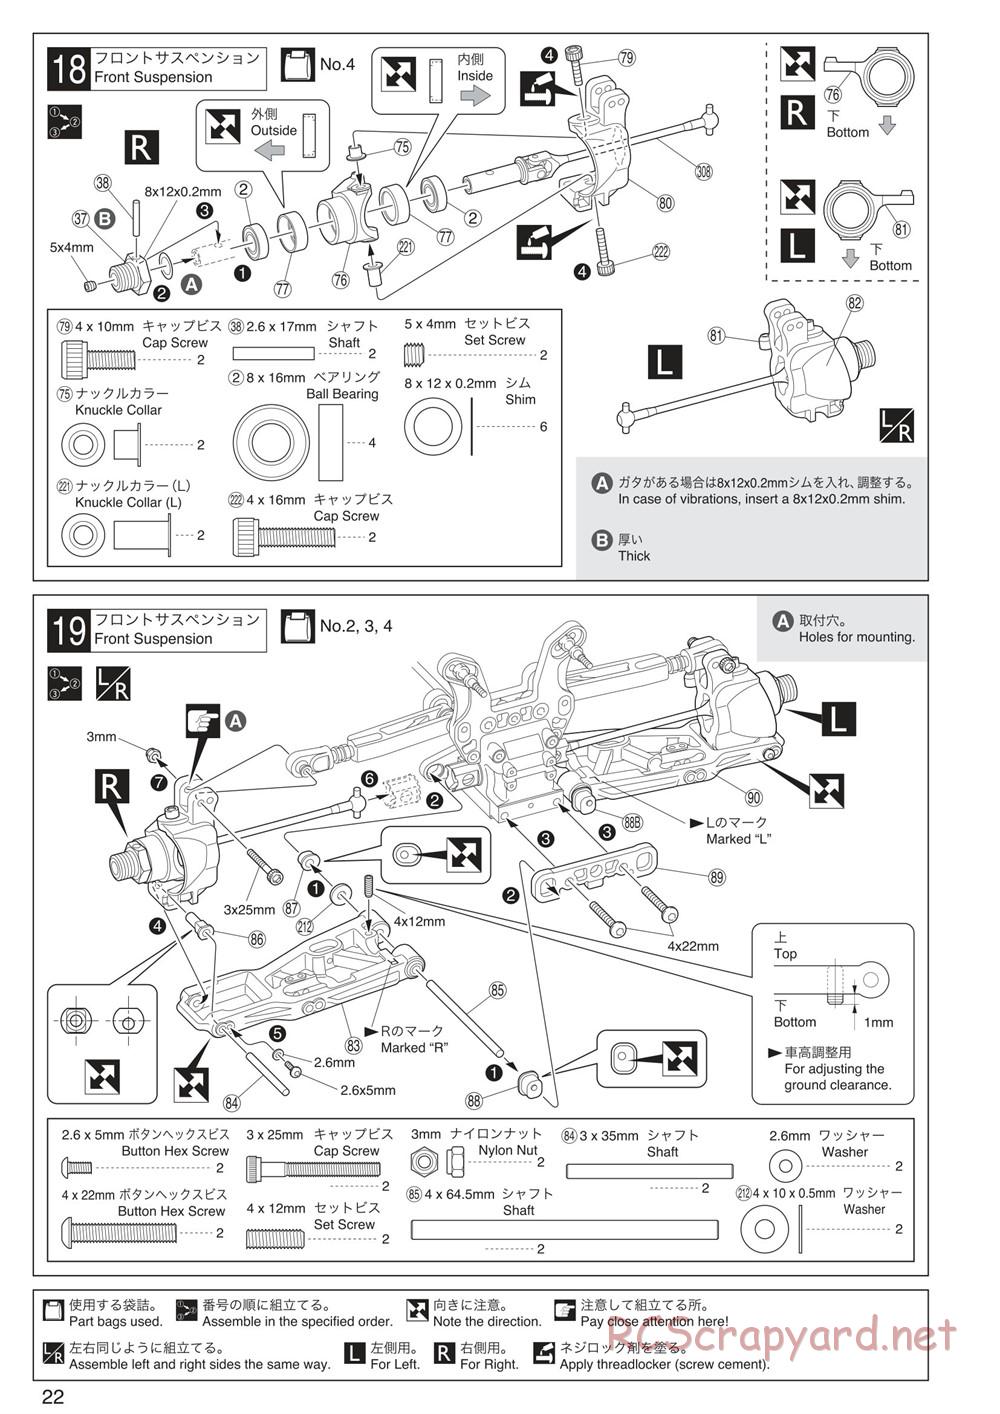 Kyosho - Inferno MP9 TKI3 - Manual - Page 22